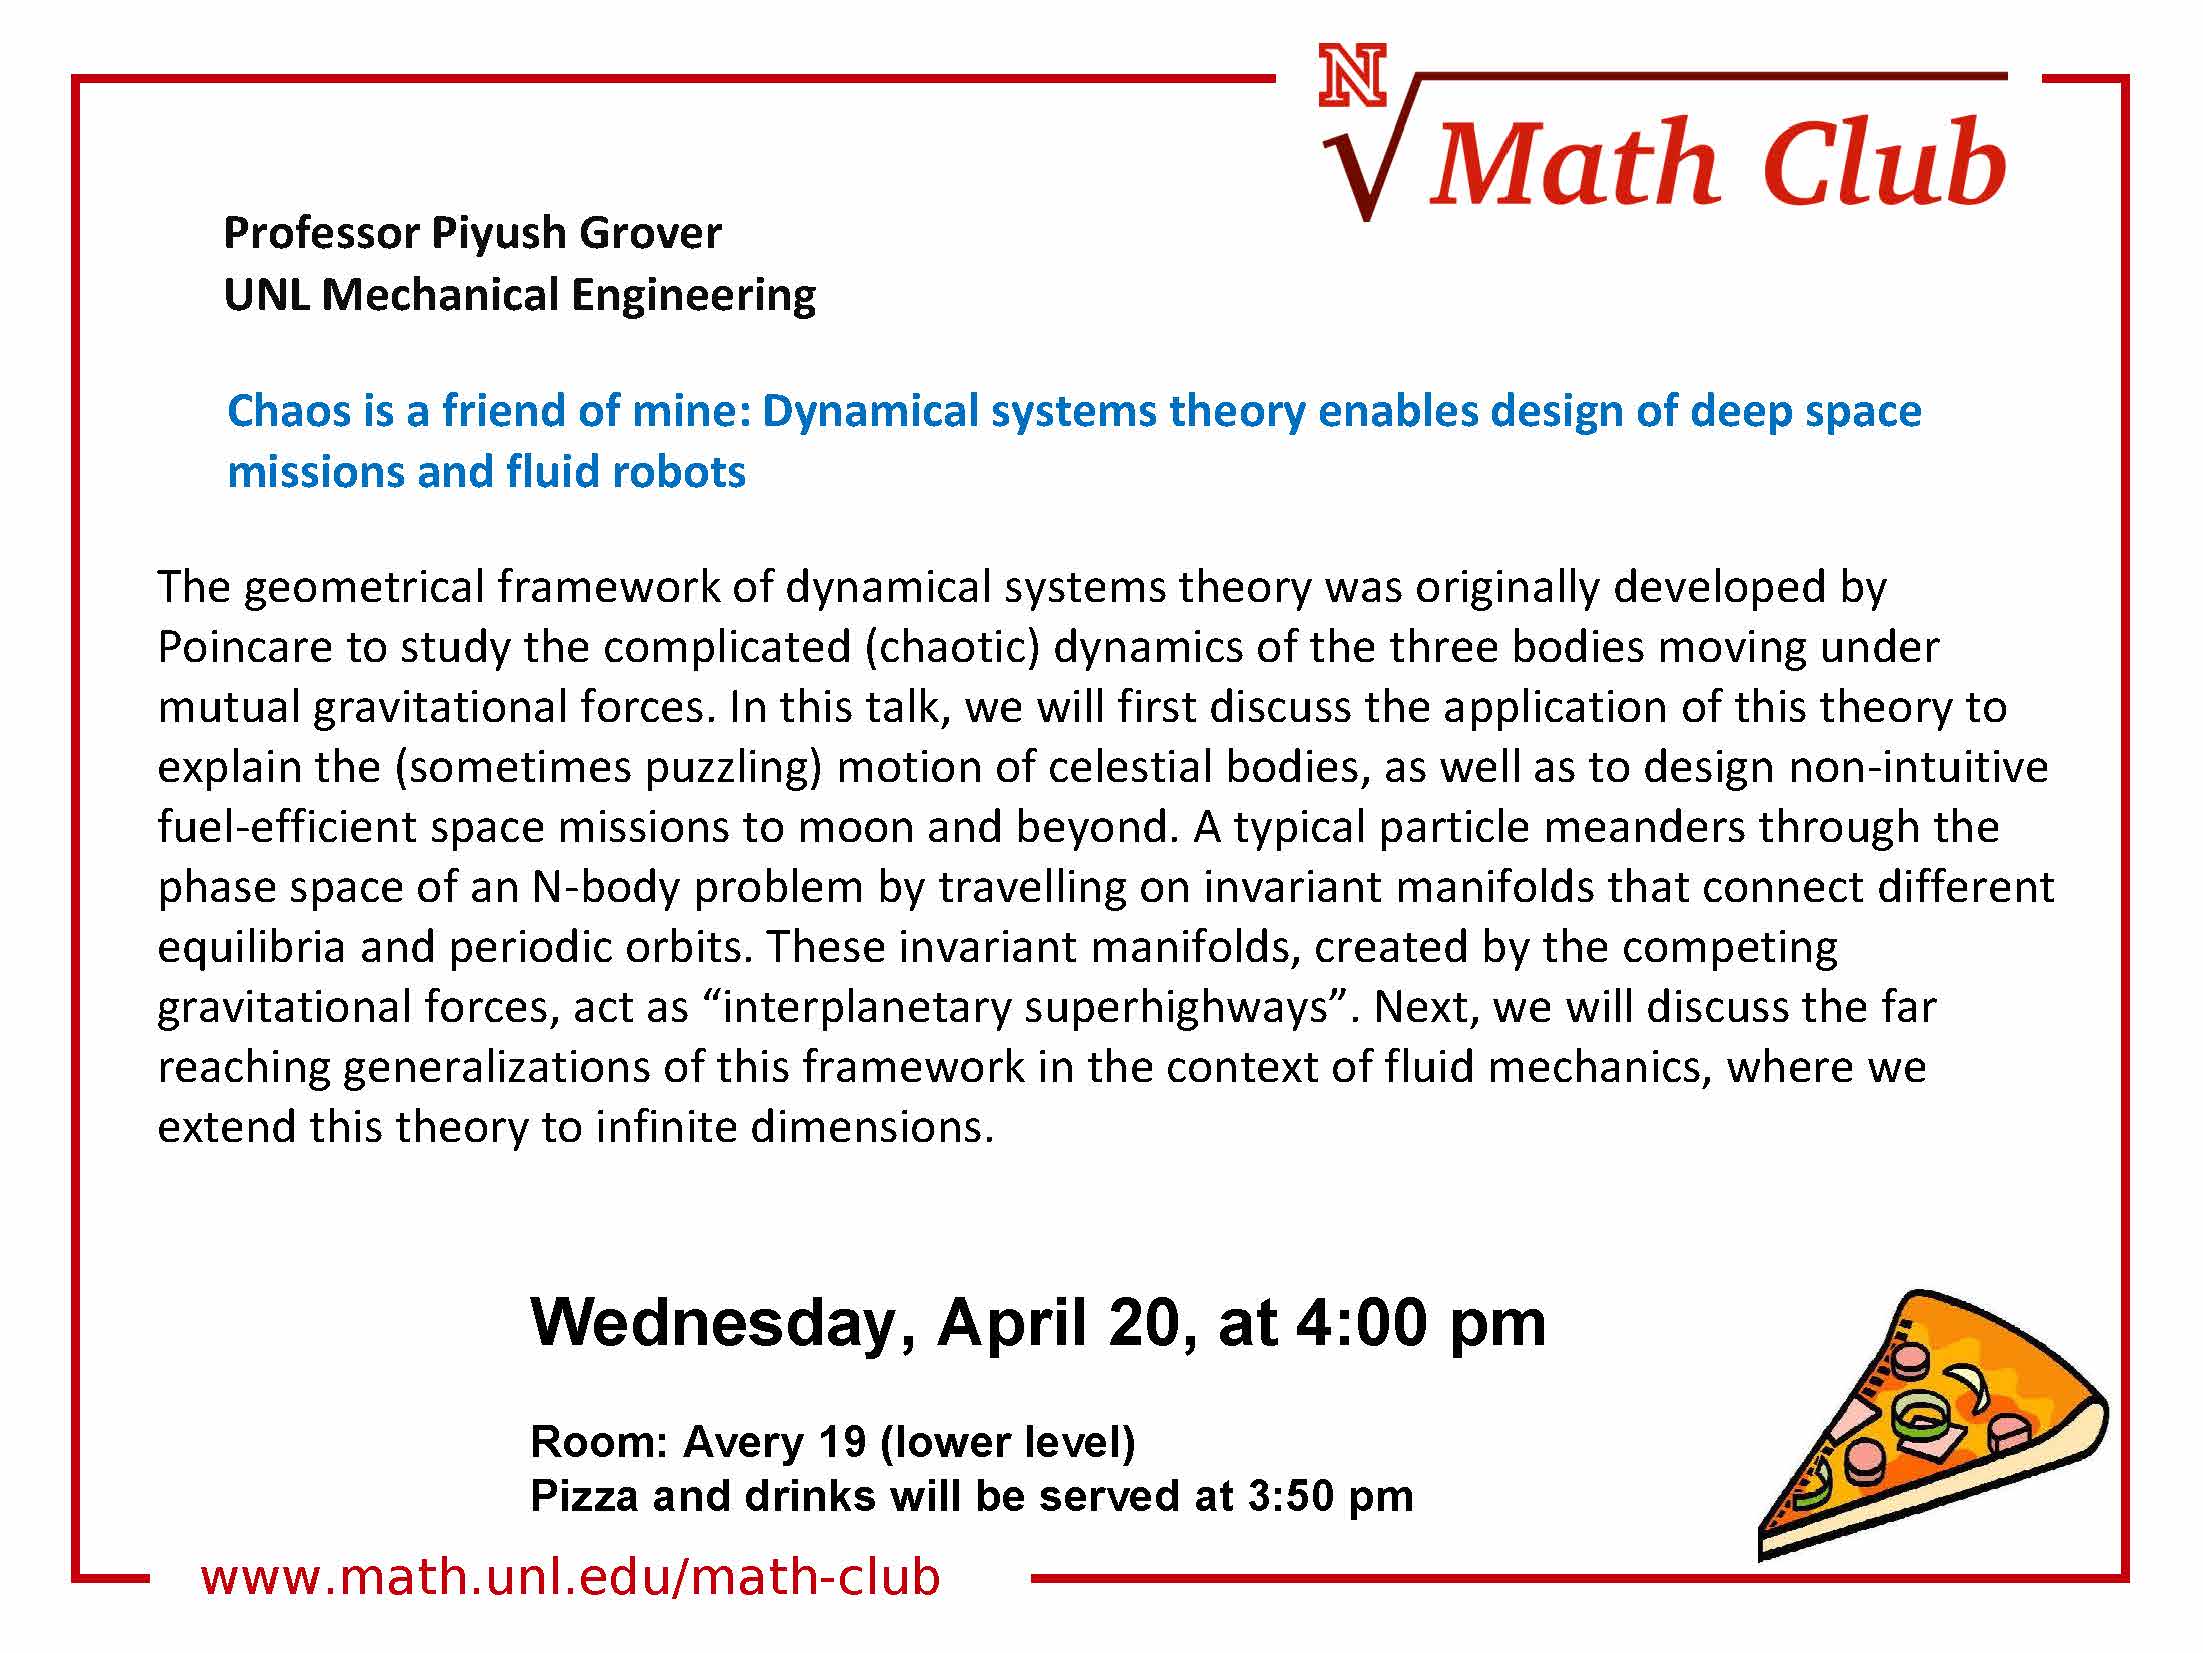 Math Club Event: Professor Grover (UNL Engineering)